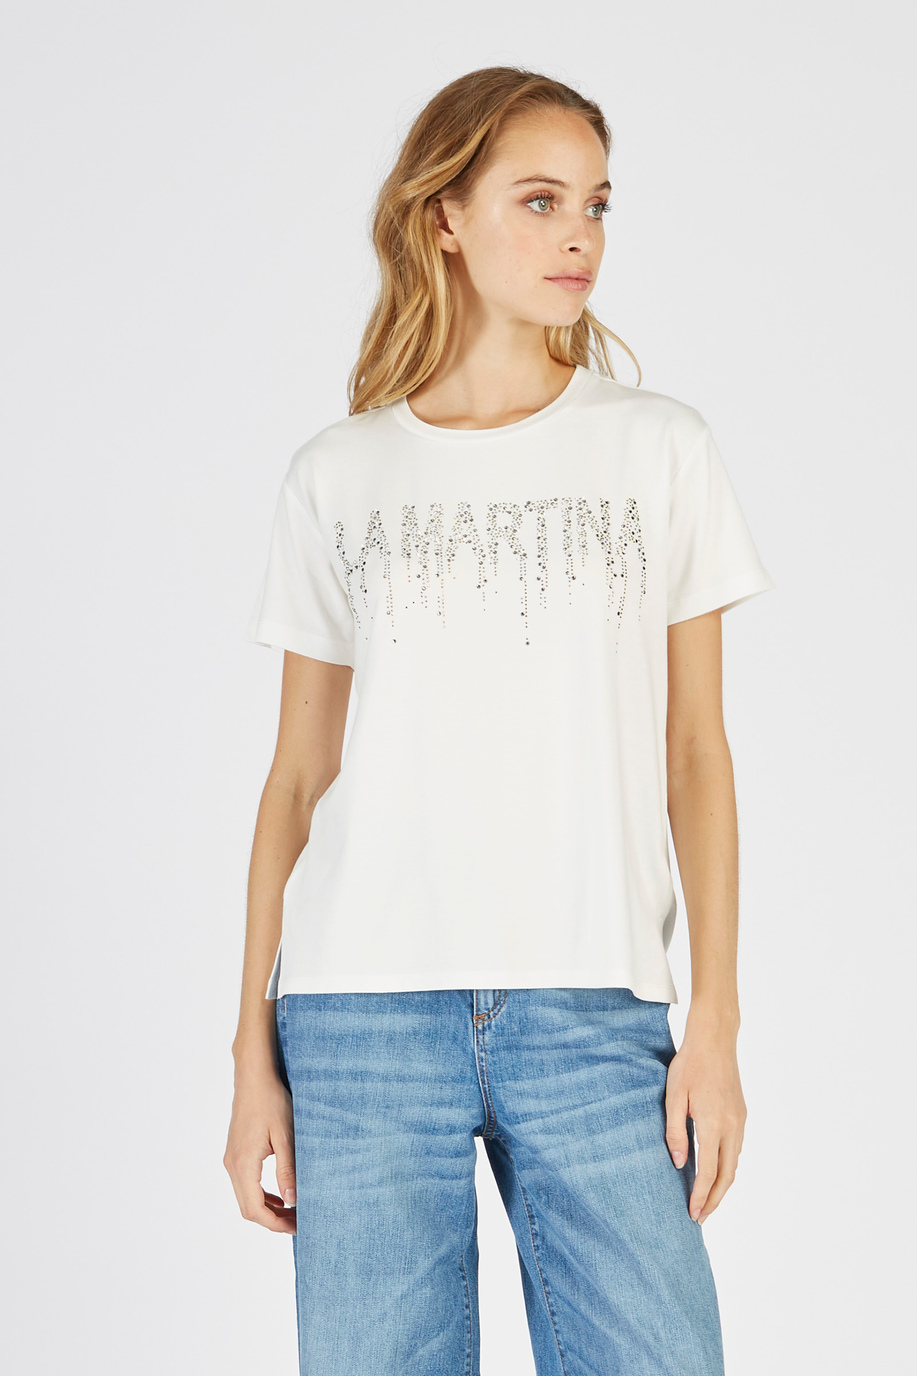 Bedrucktes T-Shirt mit normalem Schnitt - Sportlich-schicke Kleidung | La Martina - Official Online Shop